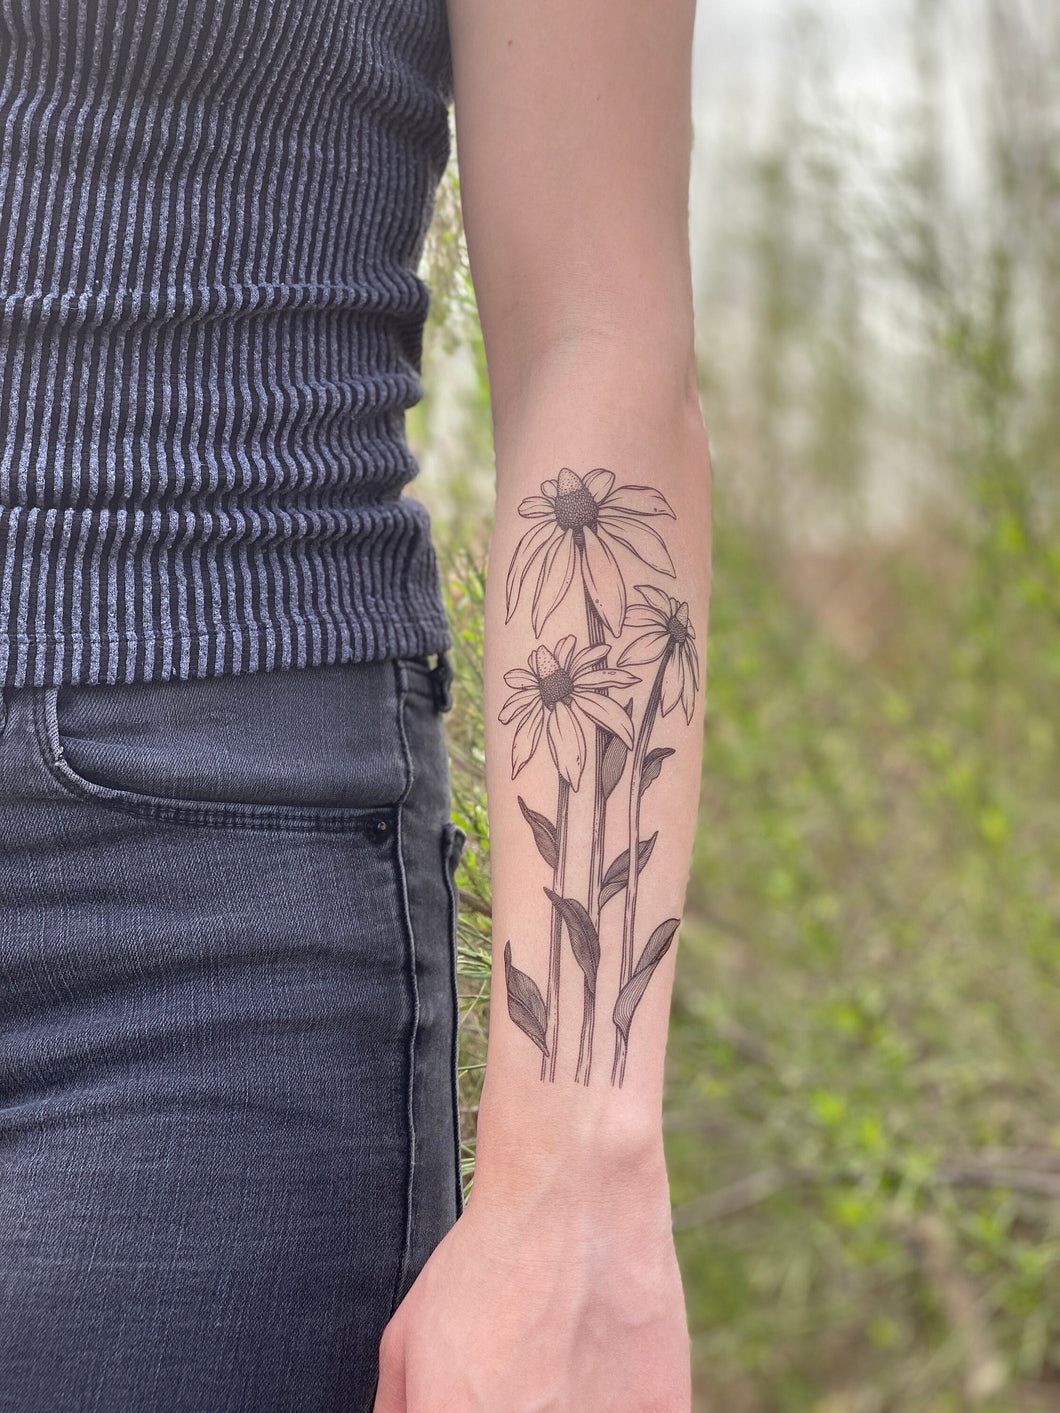 Small Pine Tree Temporary Tattoo (Set of 3) – Small Tattoos